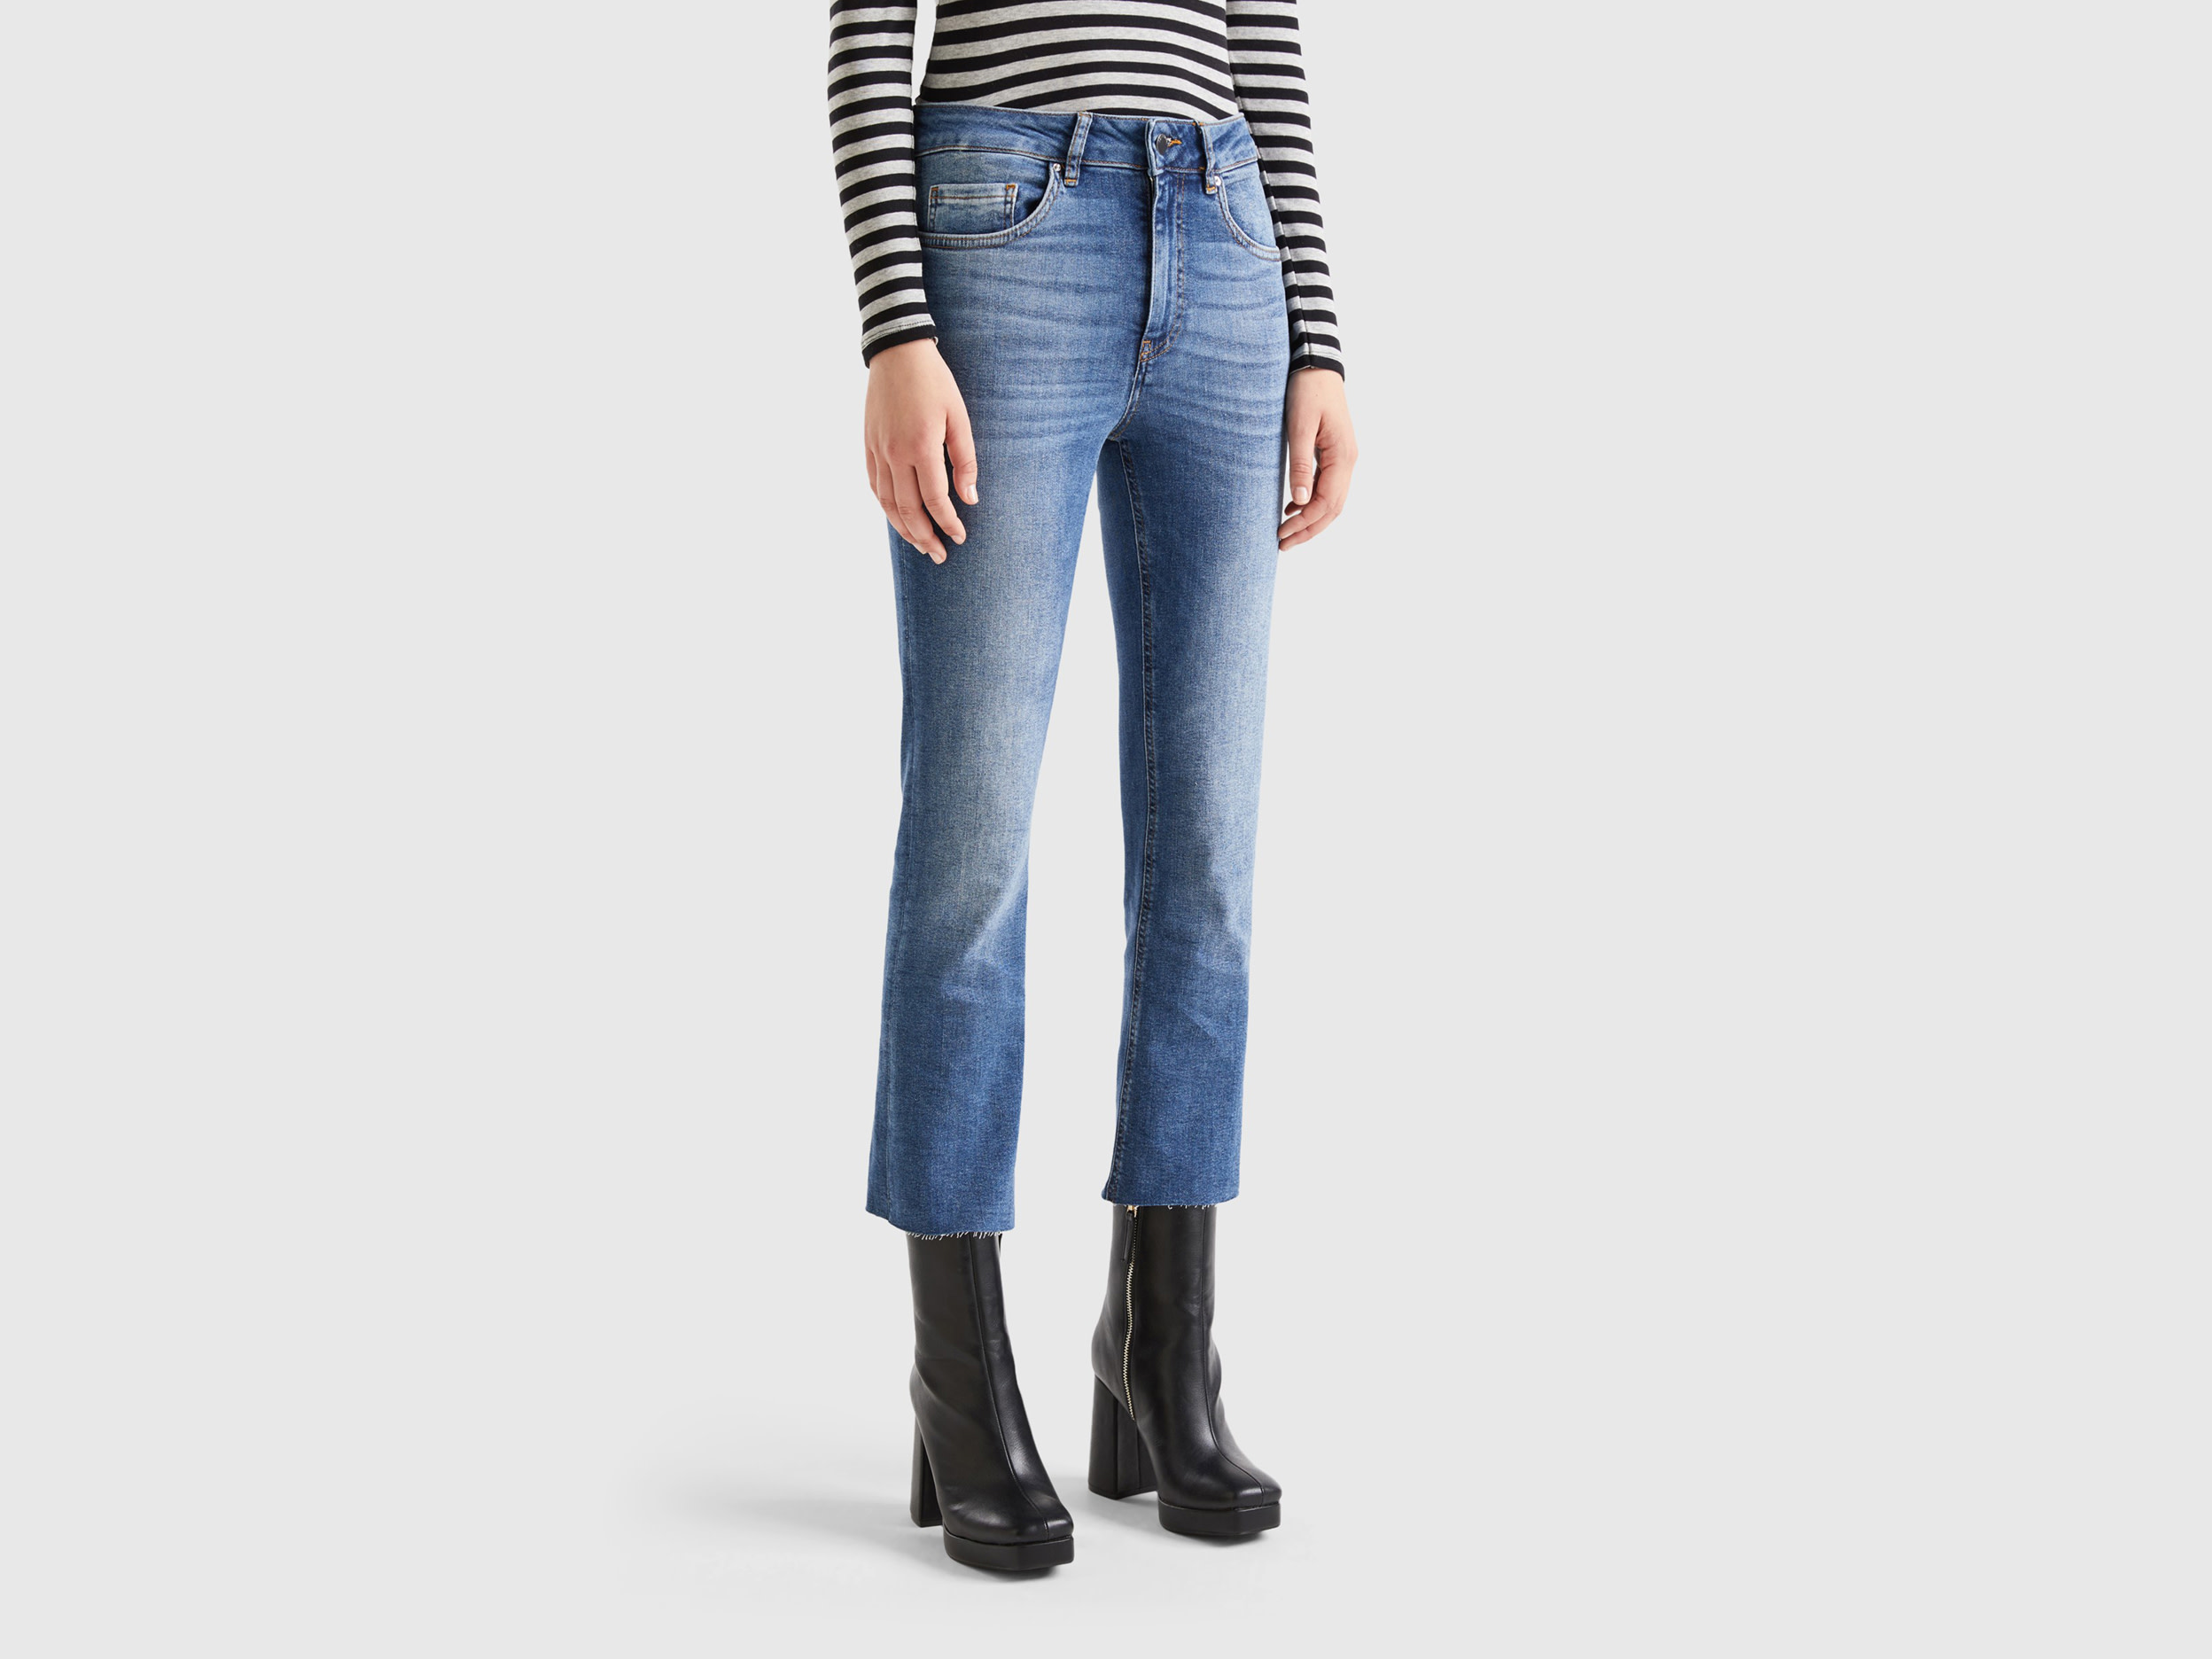 Benetton, Cropped Five-pocket Jeans, size 33, Blue, Women